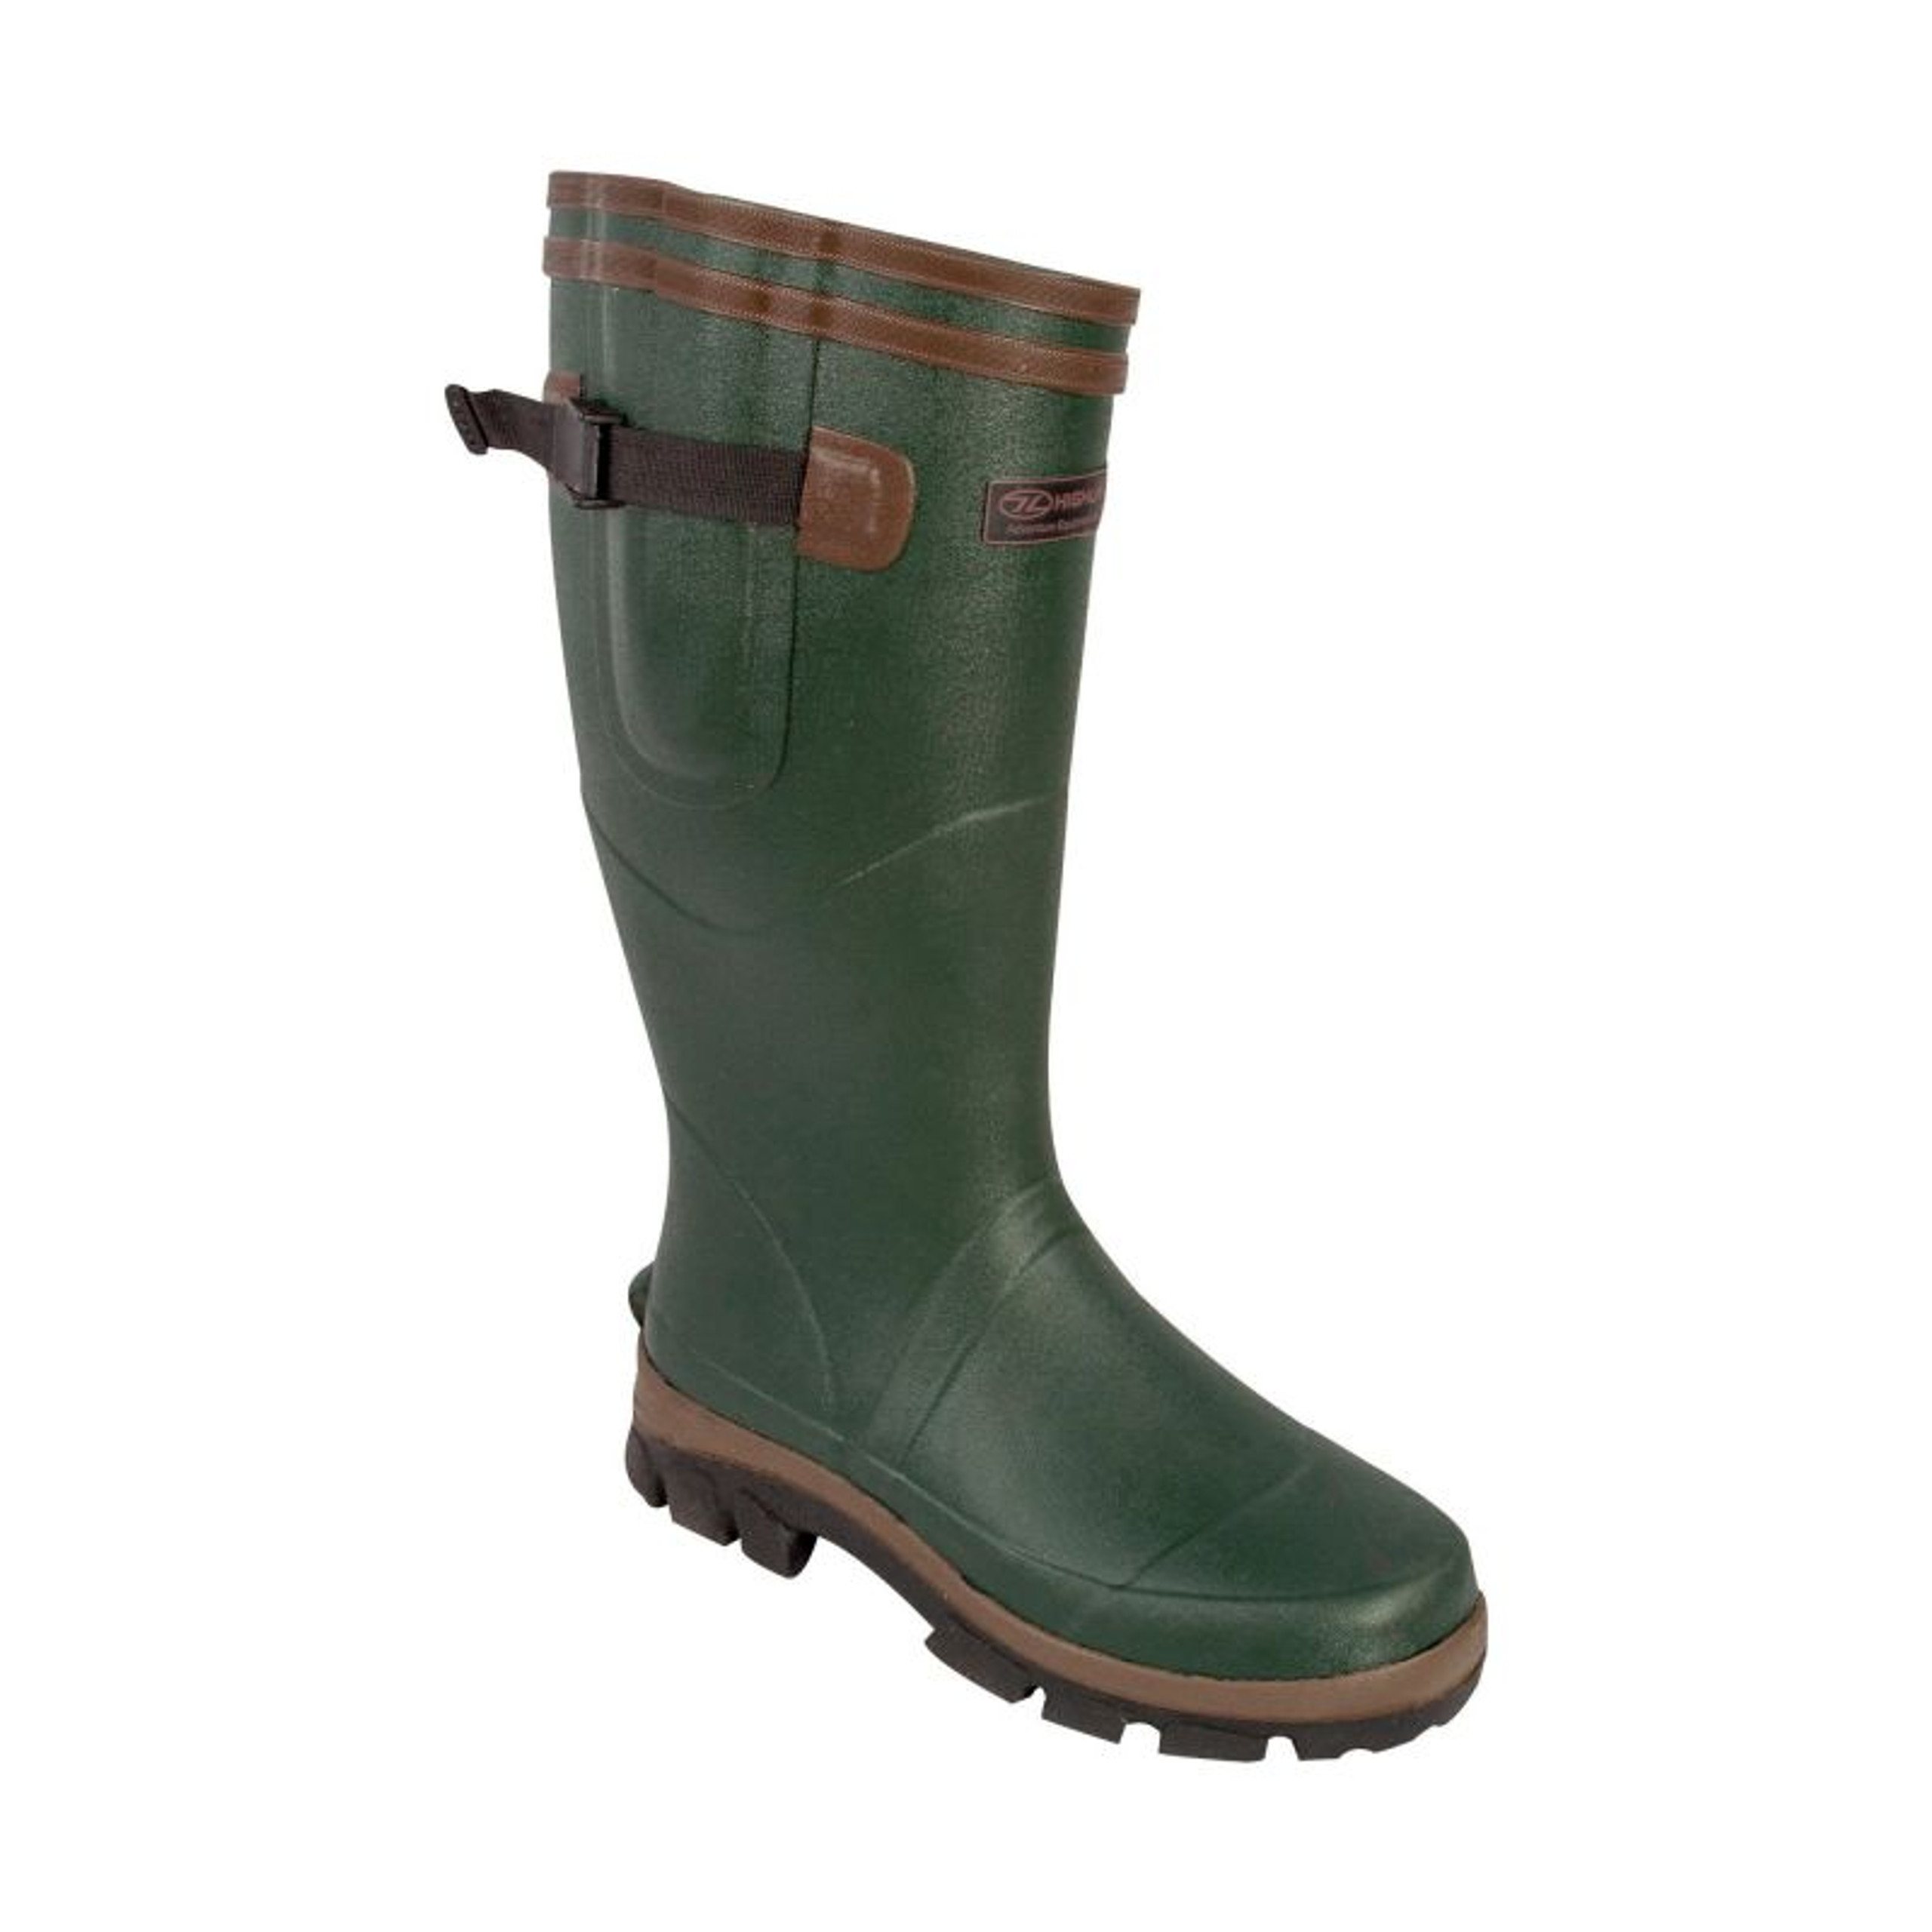 Highlander Moorland Wellington | Adjustable, hardwearing wellington boot